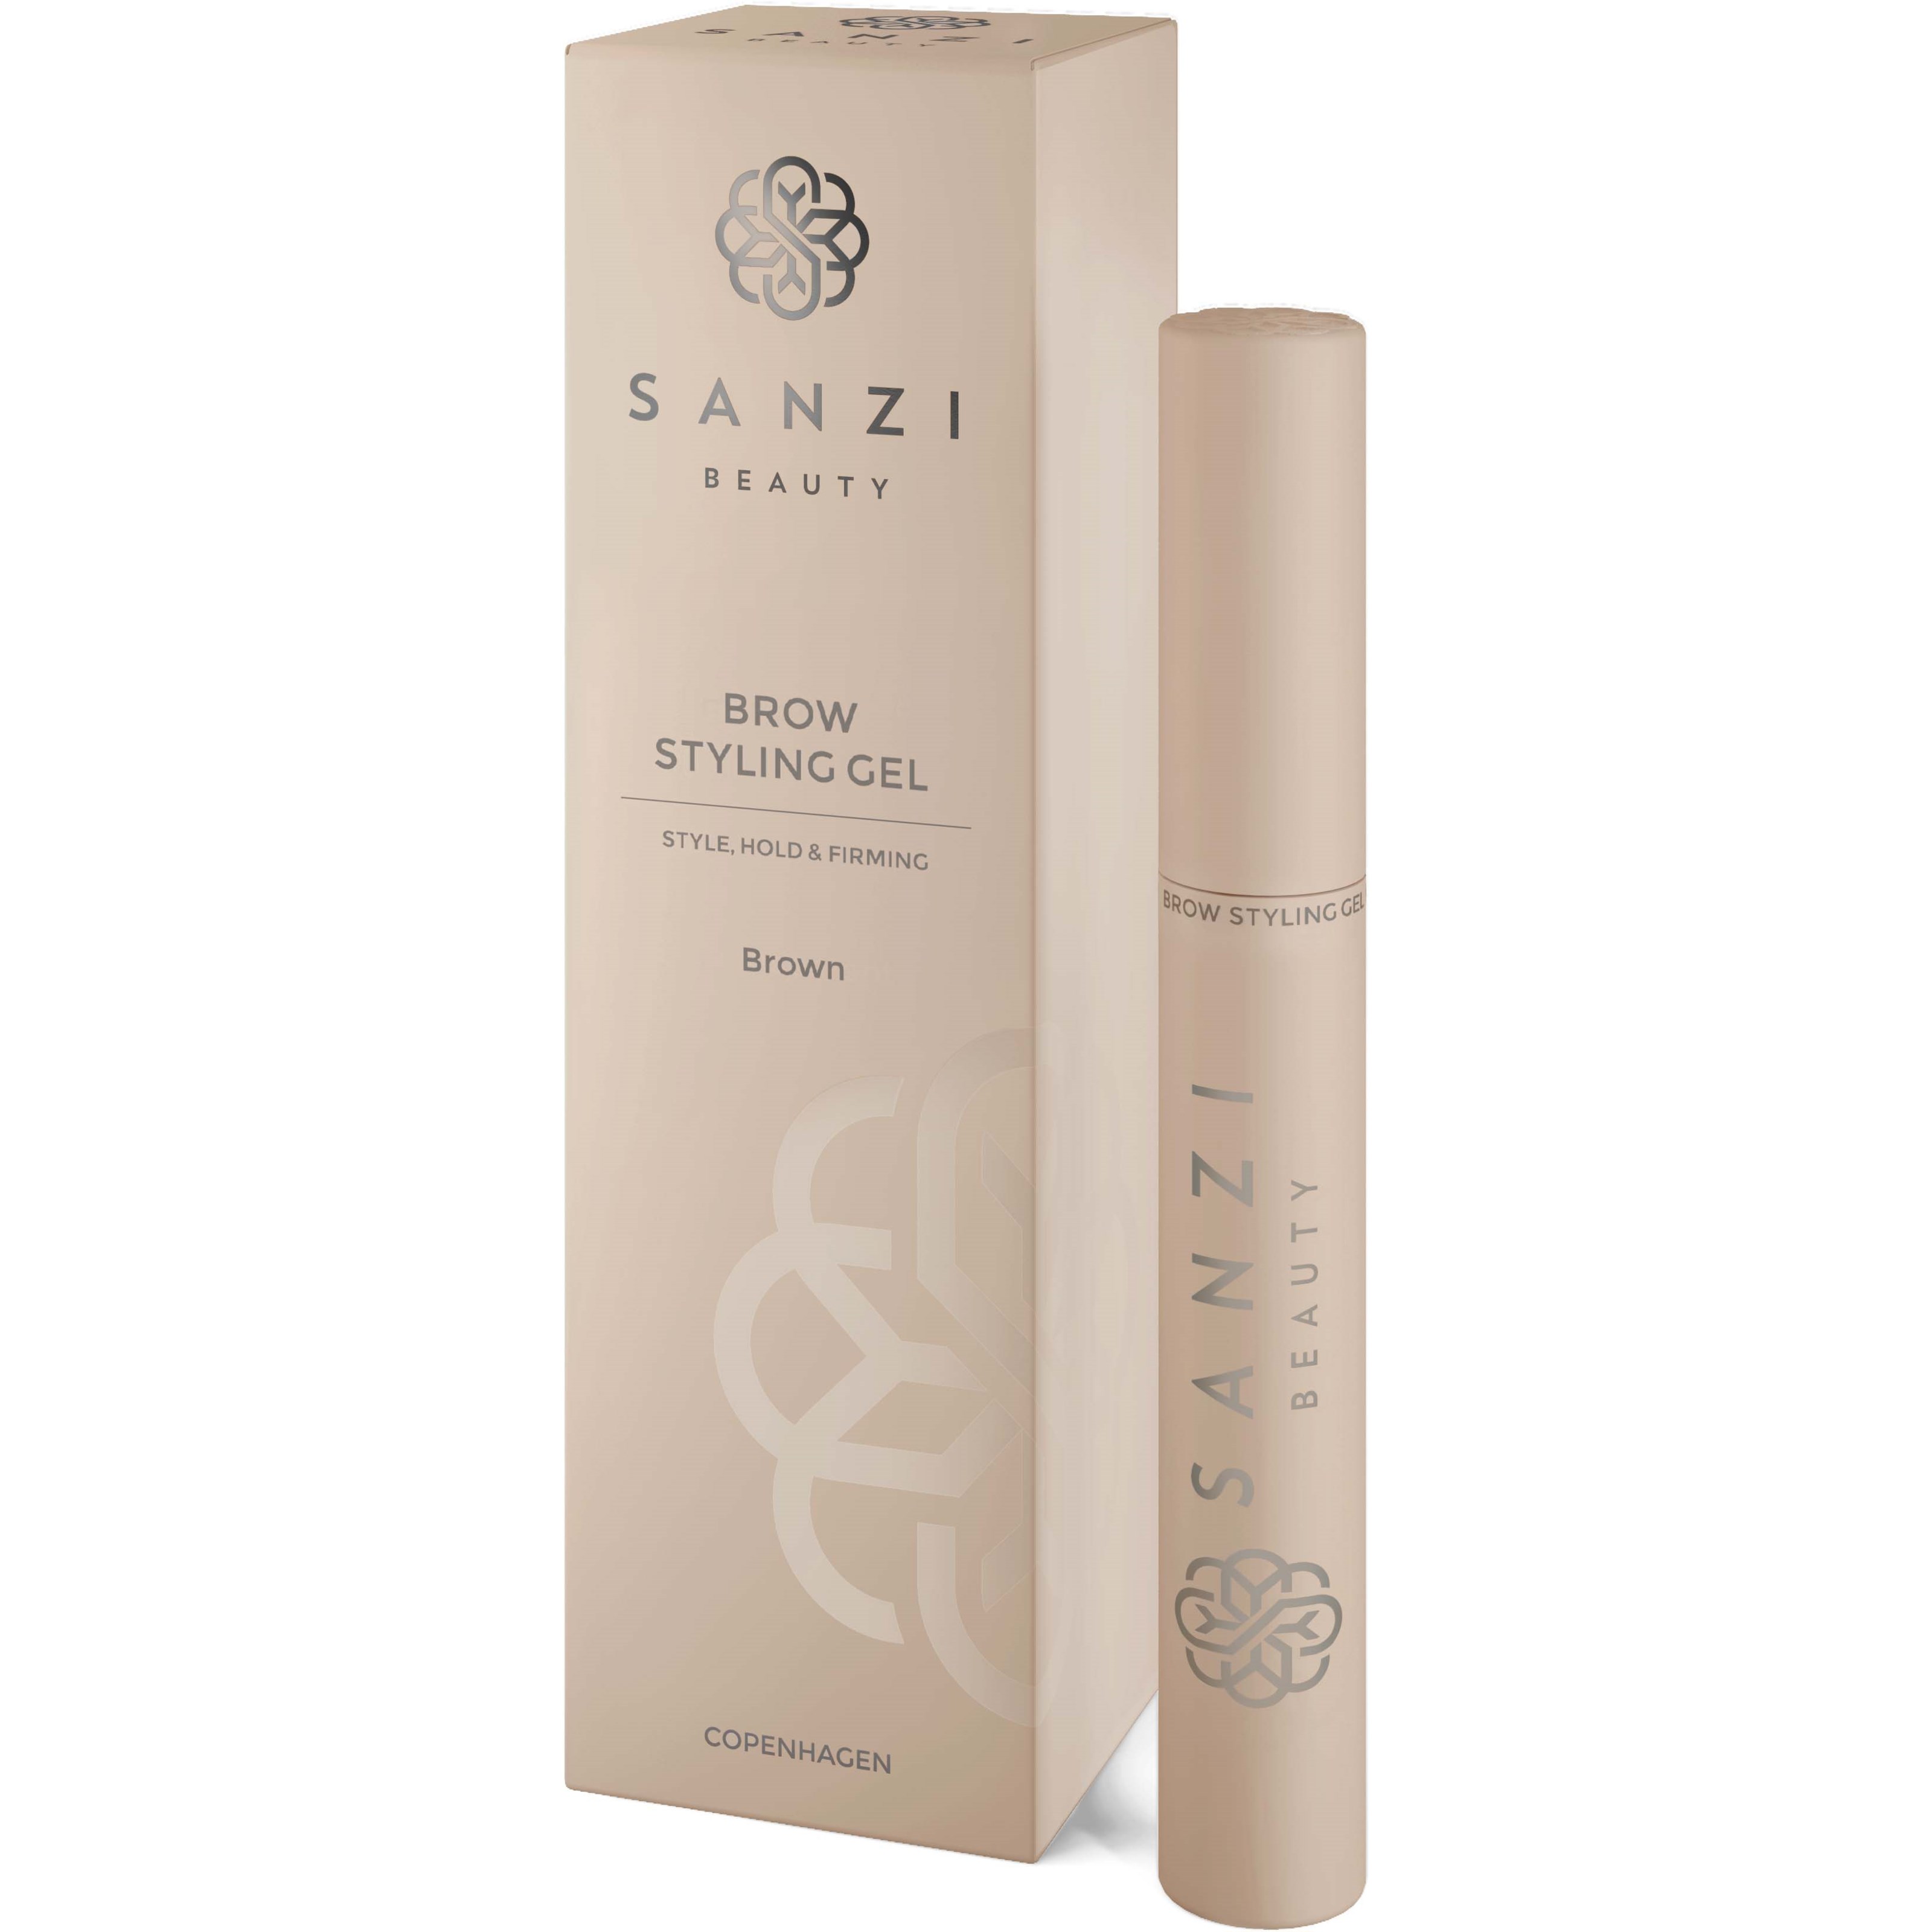 Läs mer om Sanzi Beauty Brow Styling Gel Brown